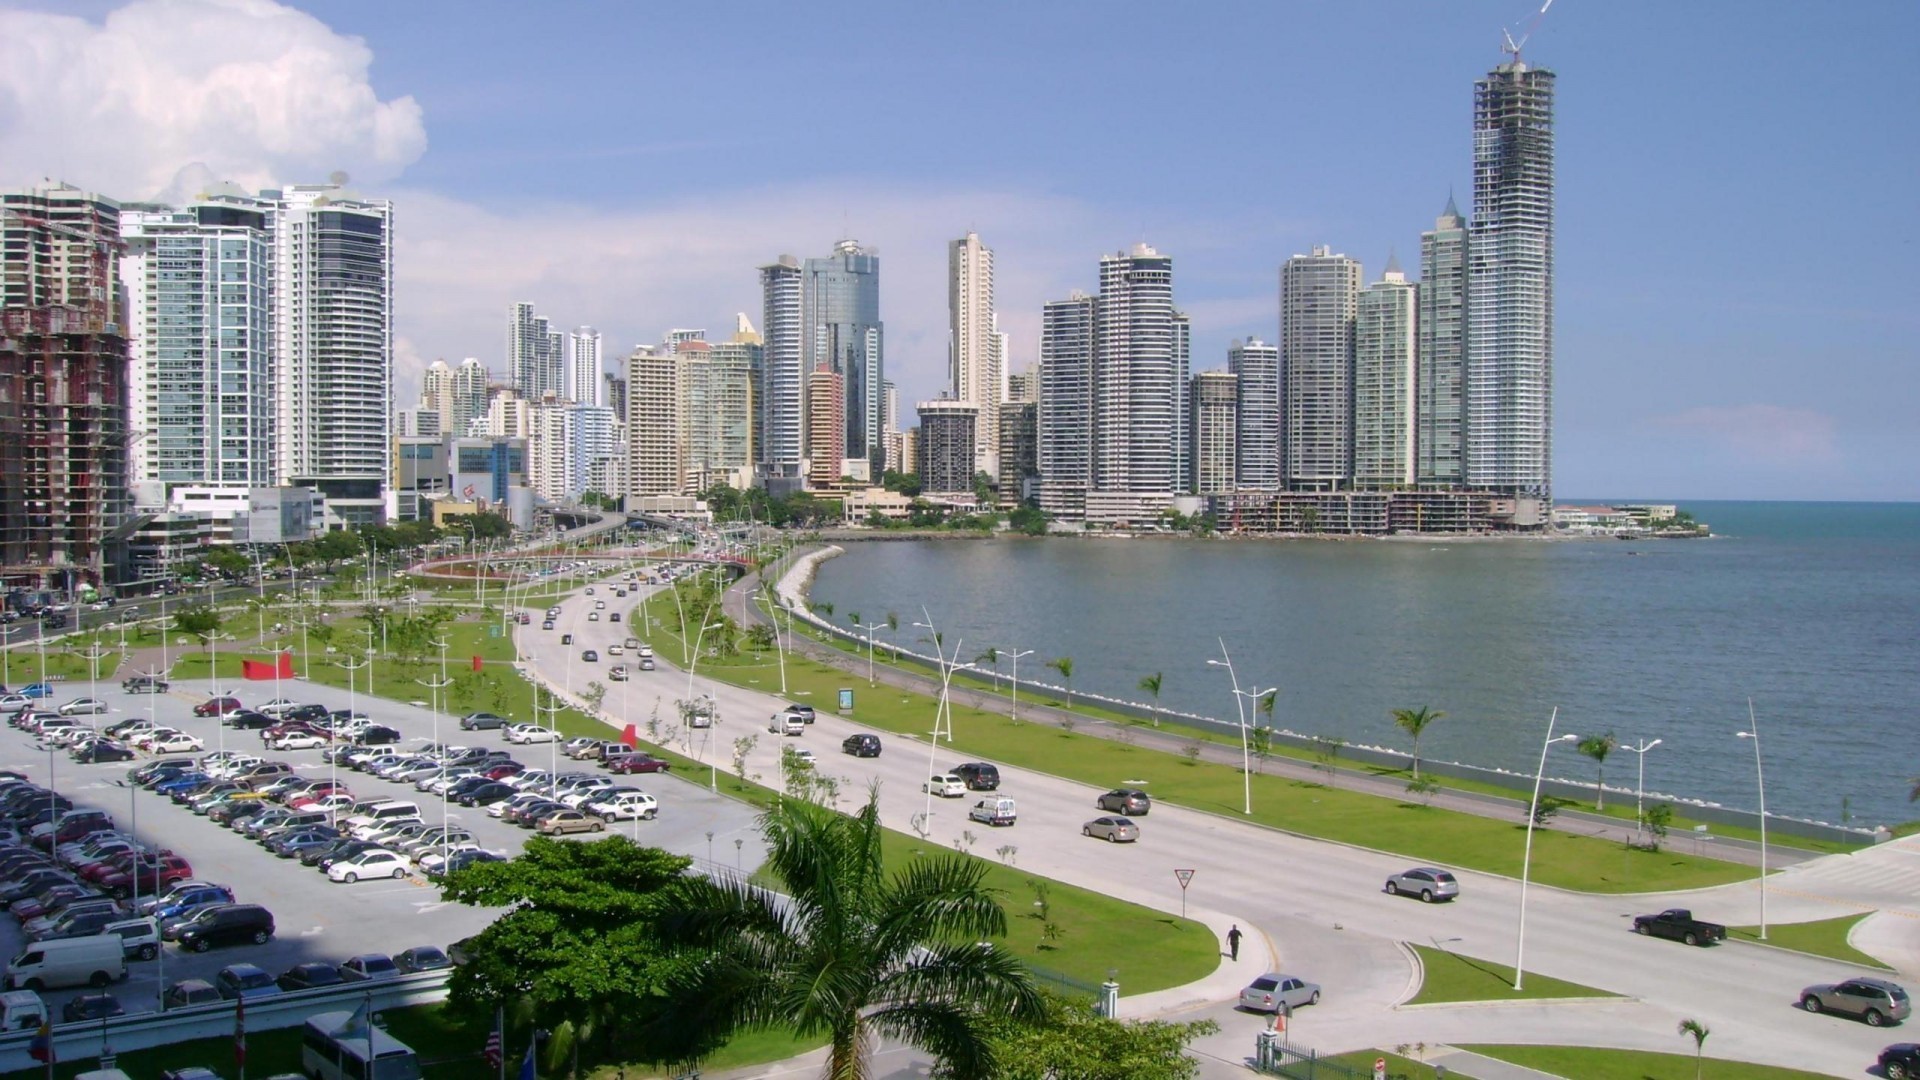 Beautiful Central America Panama City - Panama Wallpaper Hd - HD Wallpaper 